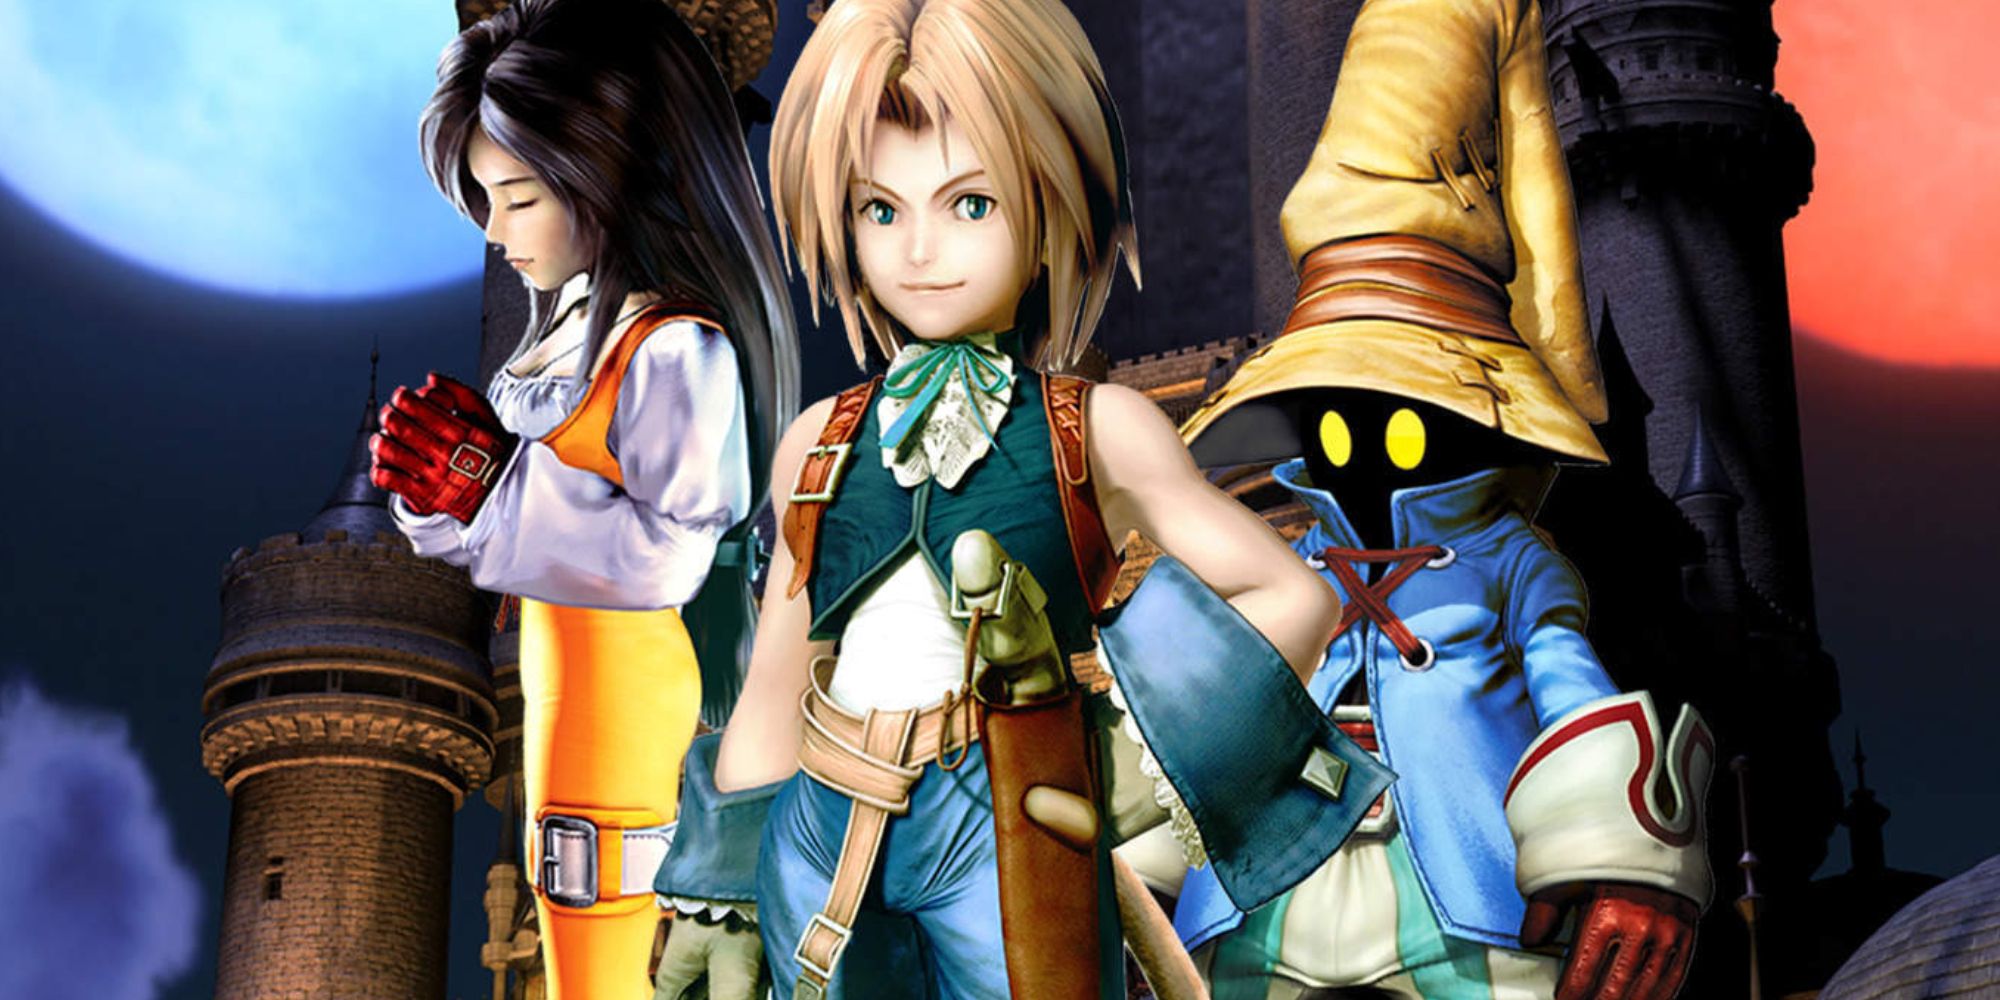 Cast of Final Fantasy 9